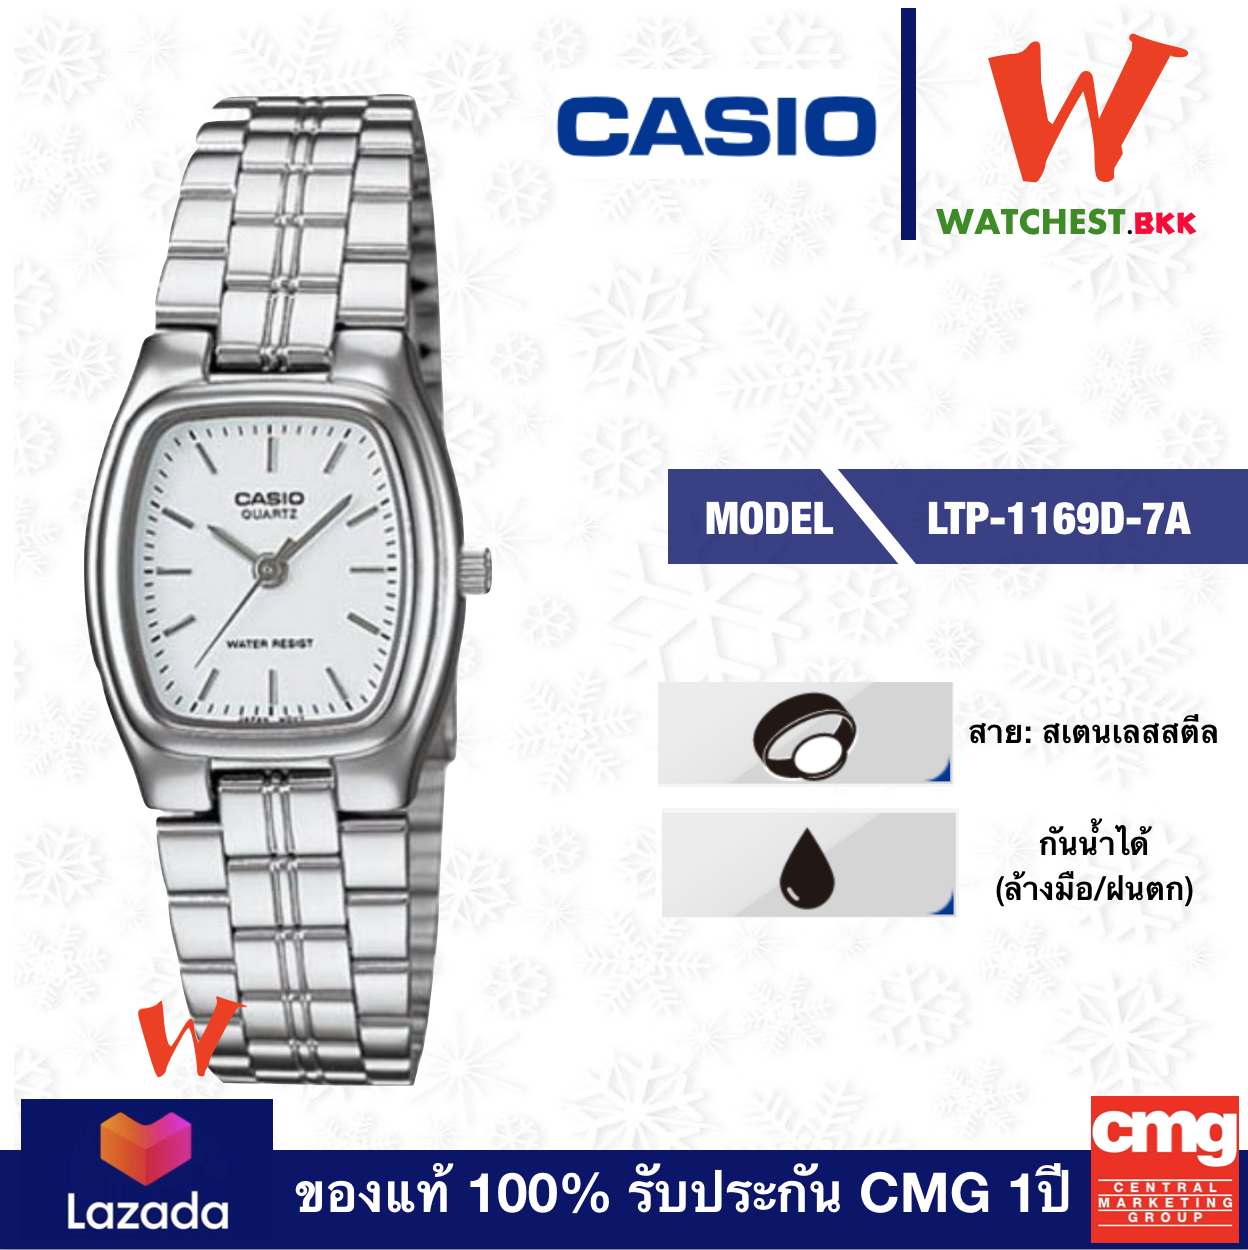 casio นาฬิกาผู้หญิง สายสเตนเลส รุ่น LTP-1169D-7A, คาสิโอ LTP1169, LTP-1169 สายเหล็ก ตัวล็อกบานพับ (watchestbkk คาสิโอ แท้ ของแท้100% ประกัน CMG)